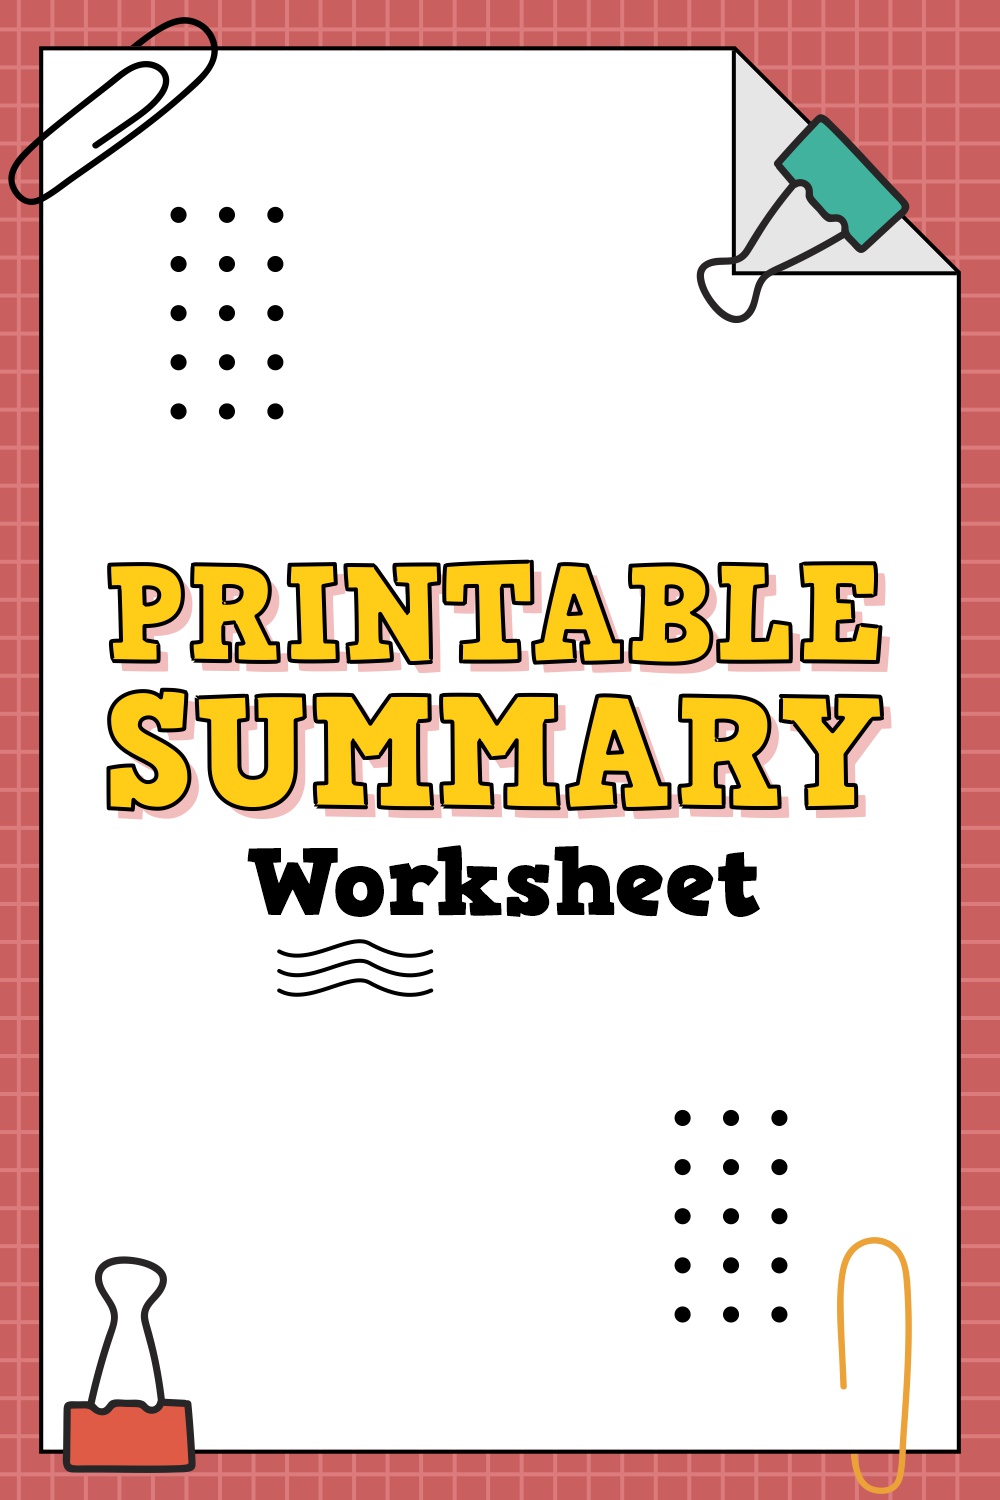 13 Images of Printable Summary Worksheet